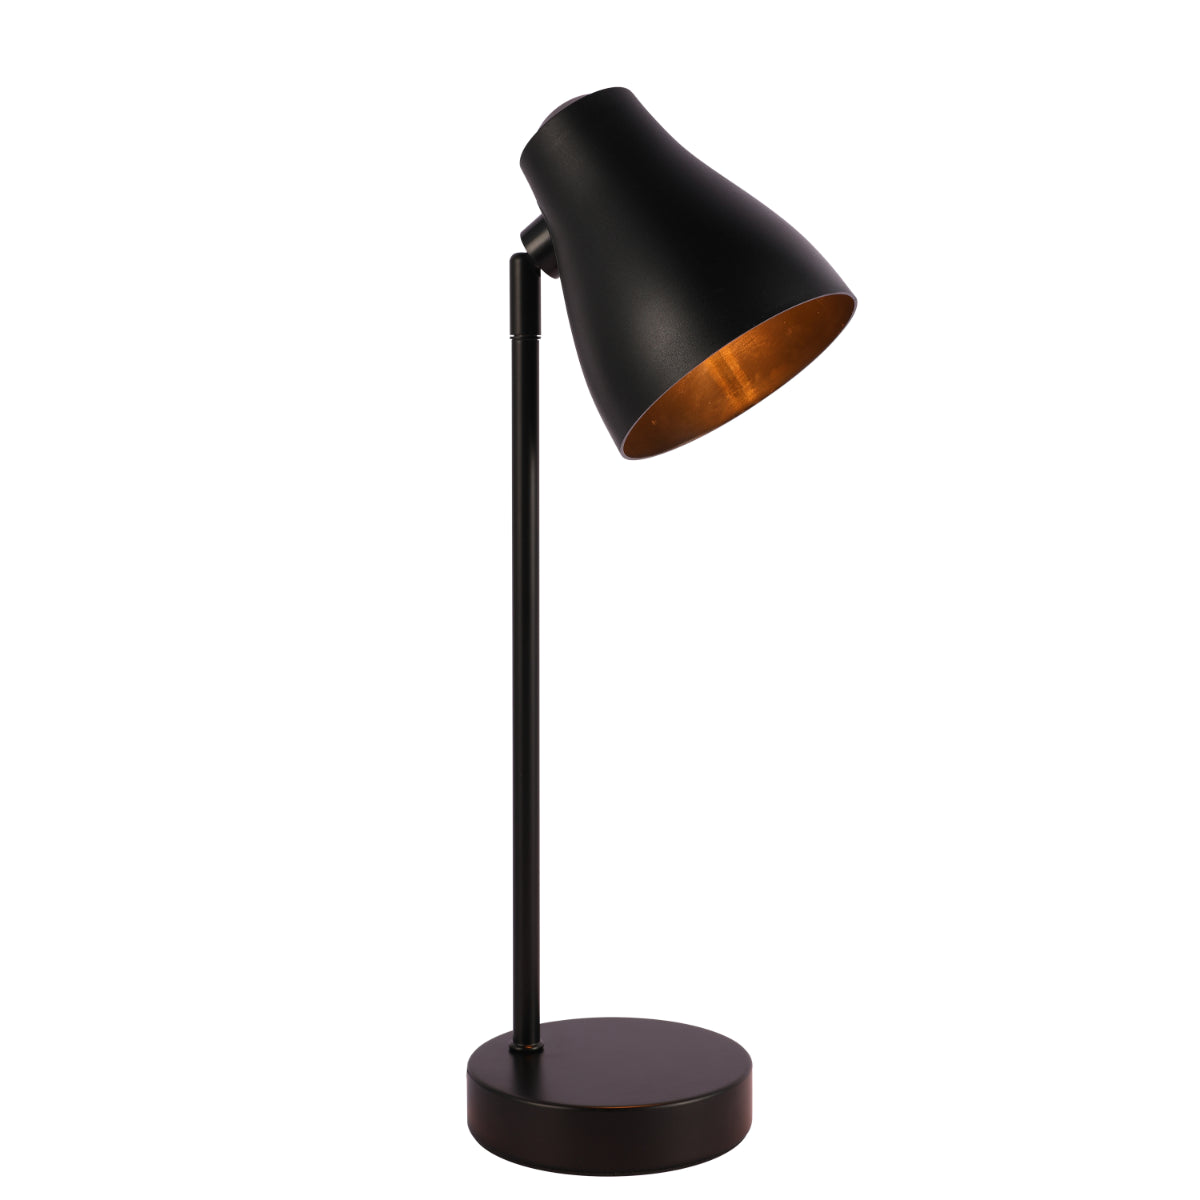 Main image of Elegant Rotatable Desk Lamp in Assorted Colors 130-03650